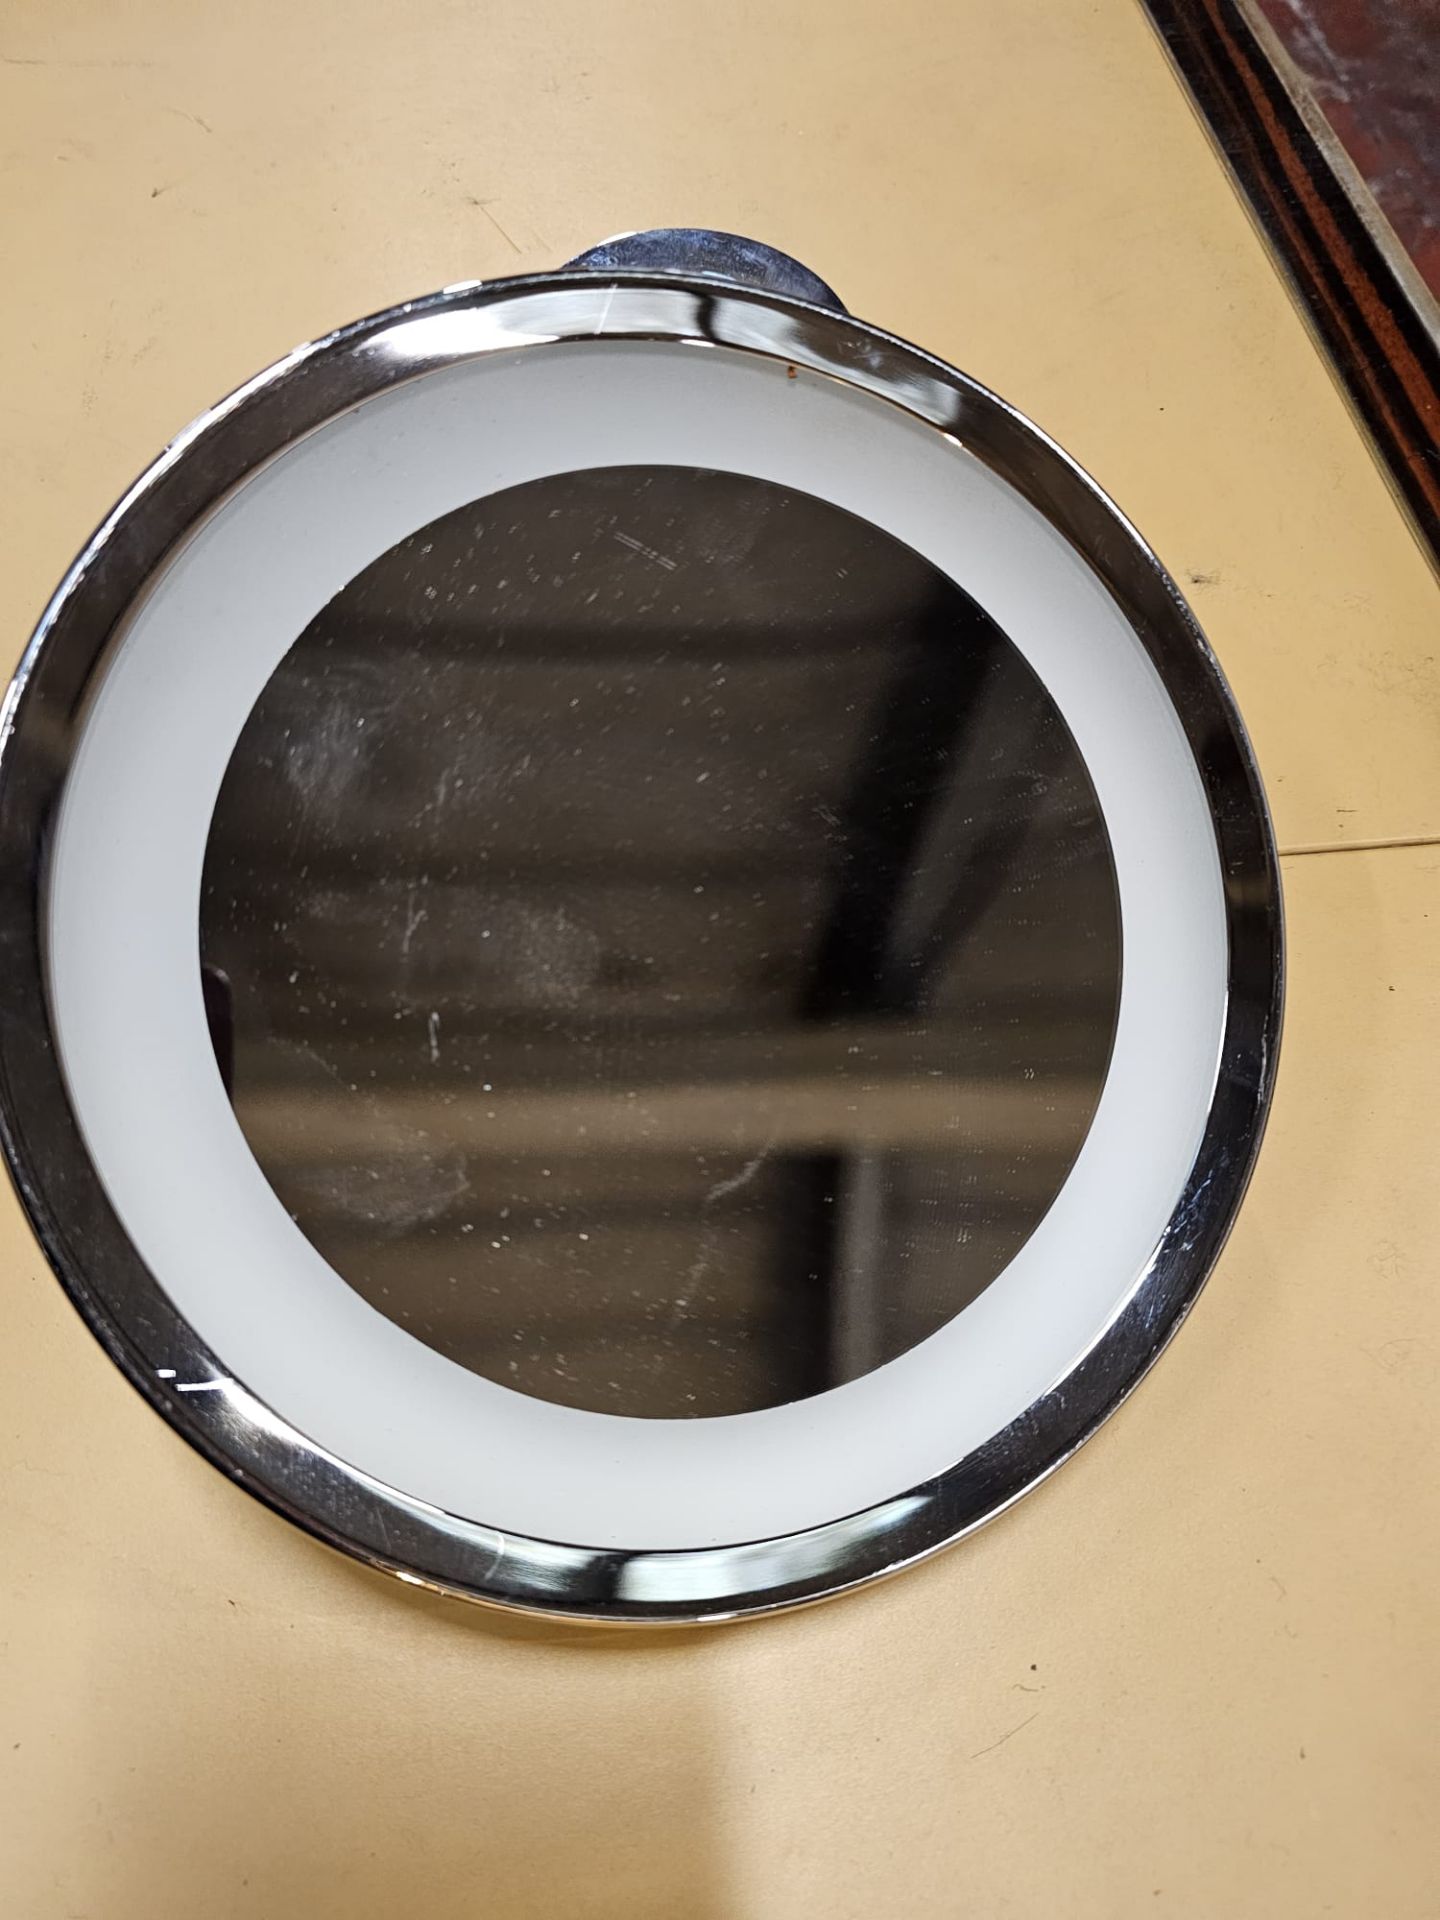 LED Illuminated Magnifying Vanity Mirror For Bathroom Round Ingress Protection Rating IP51